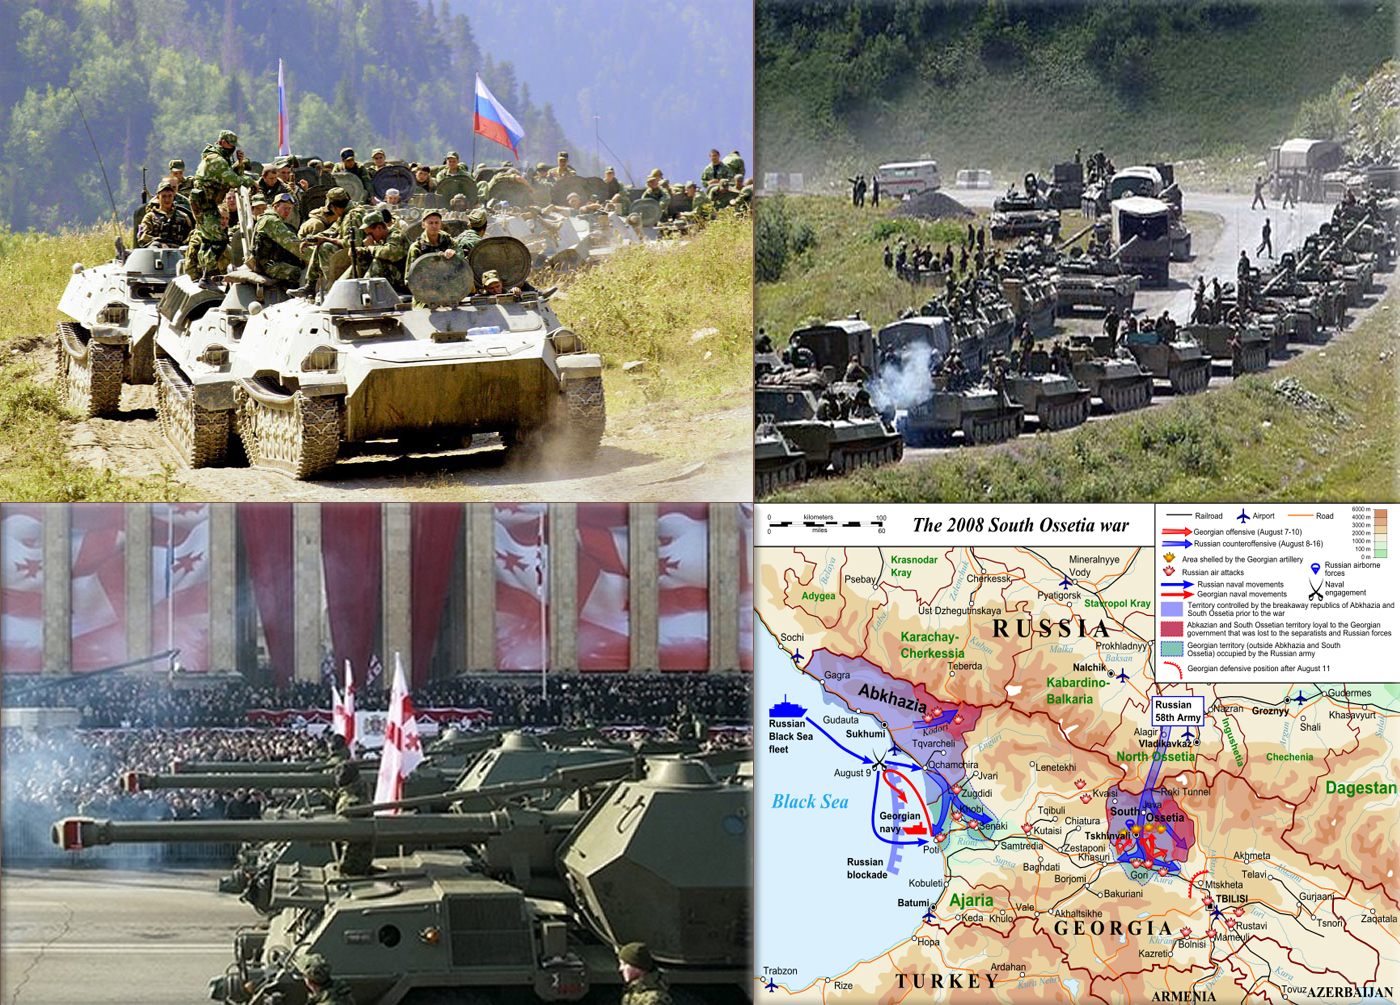 South Ossetian War: Russian units occupy the Georgian city of Gori